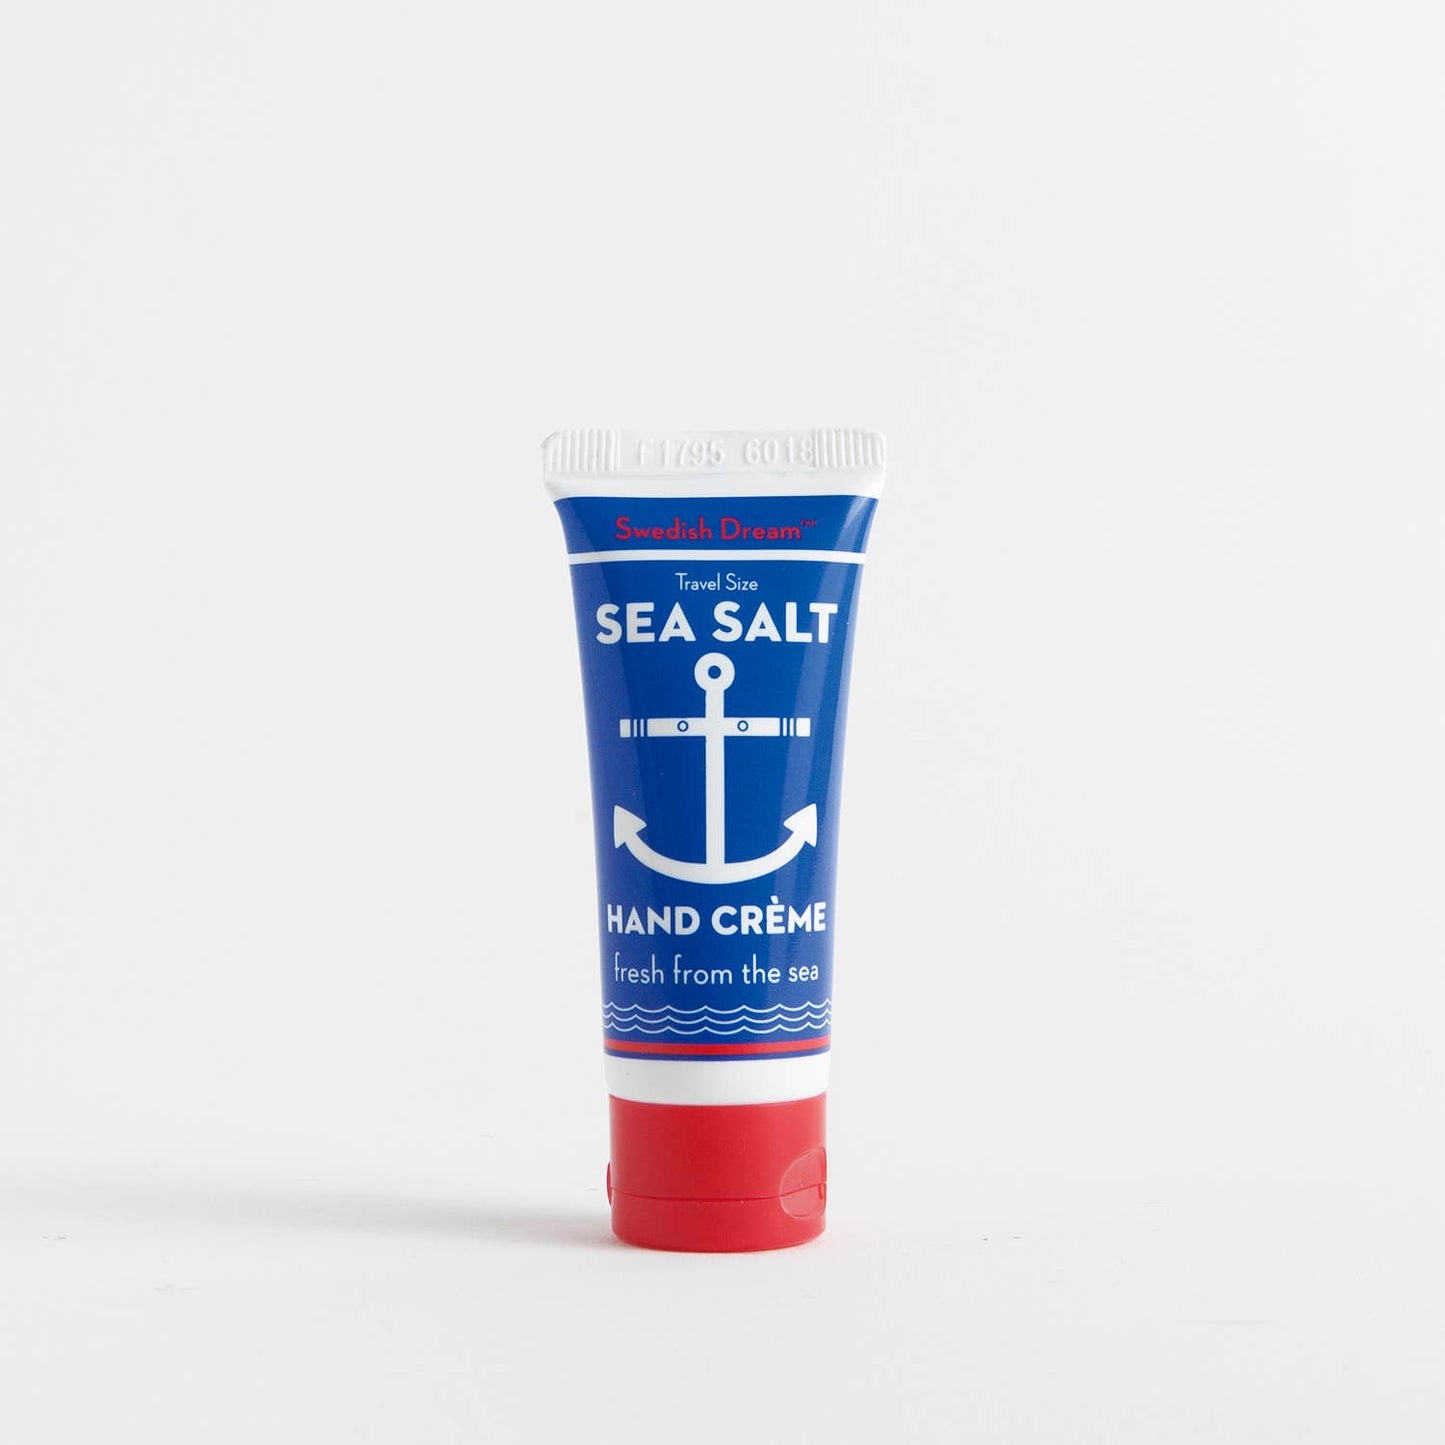 Kalastyle - "Travel Size" Sea Salt Hand Crème